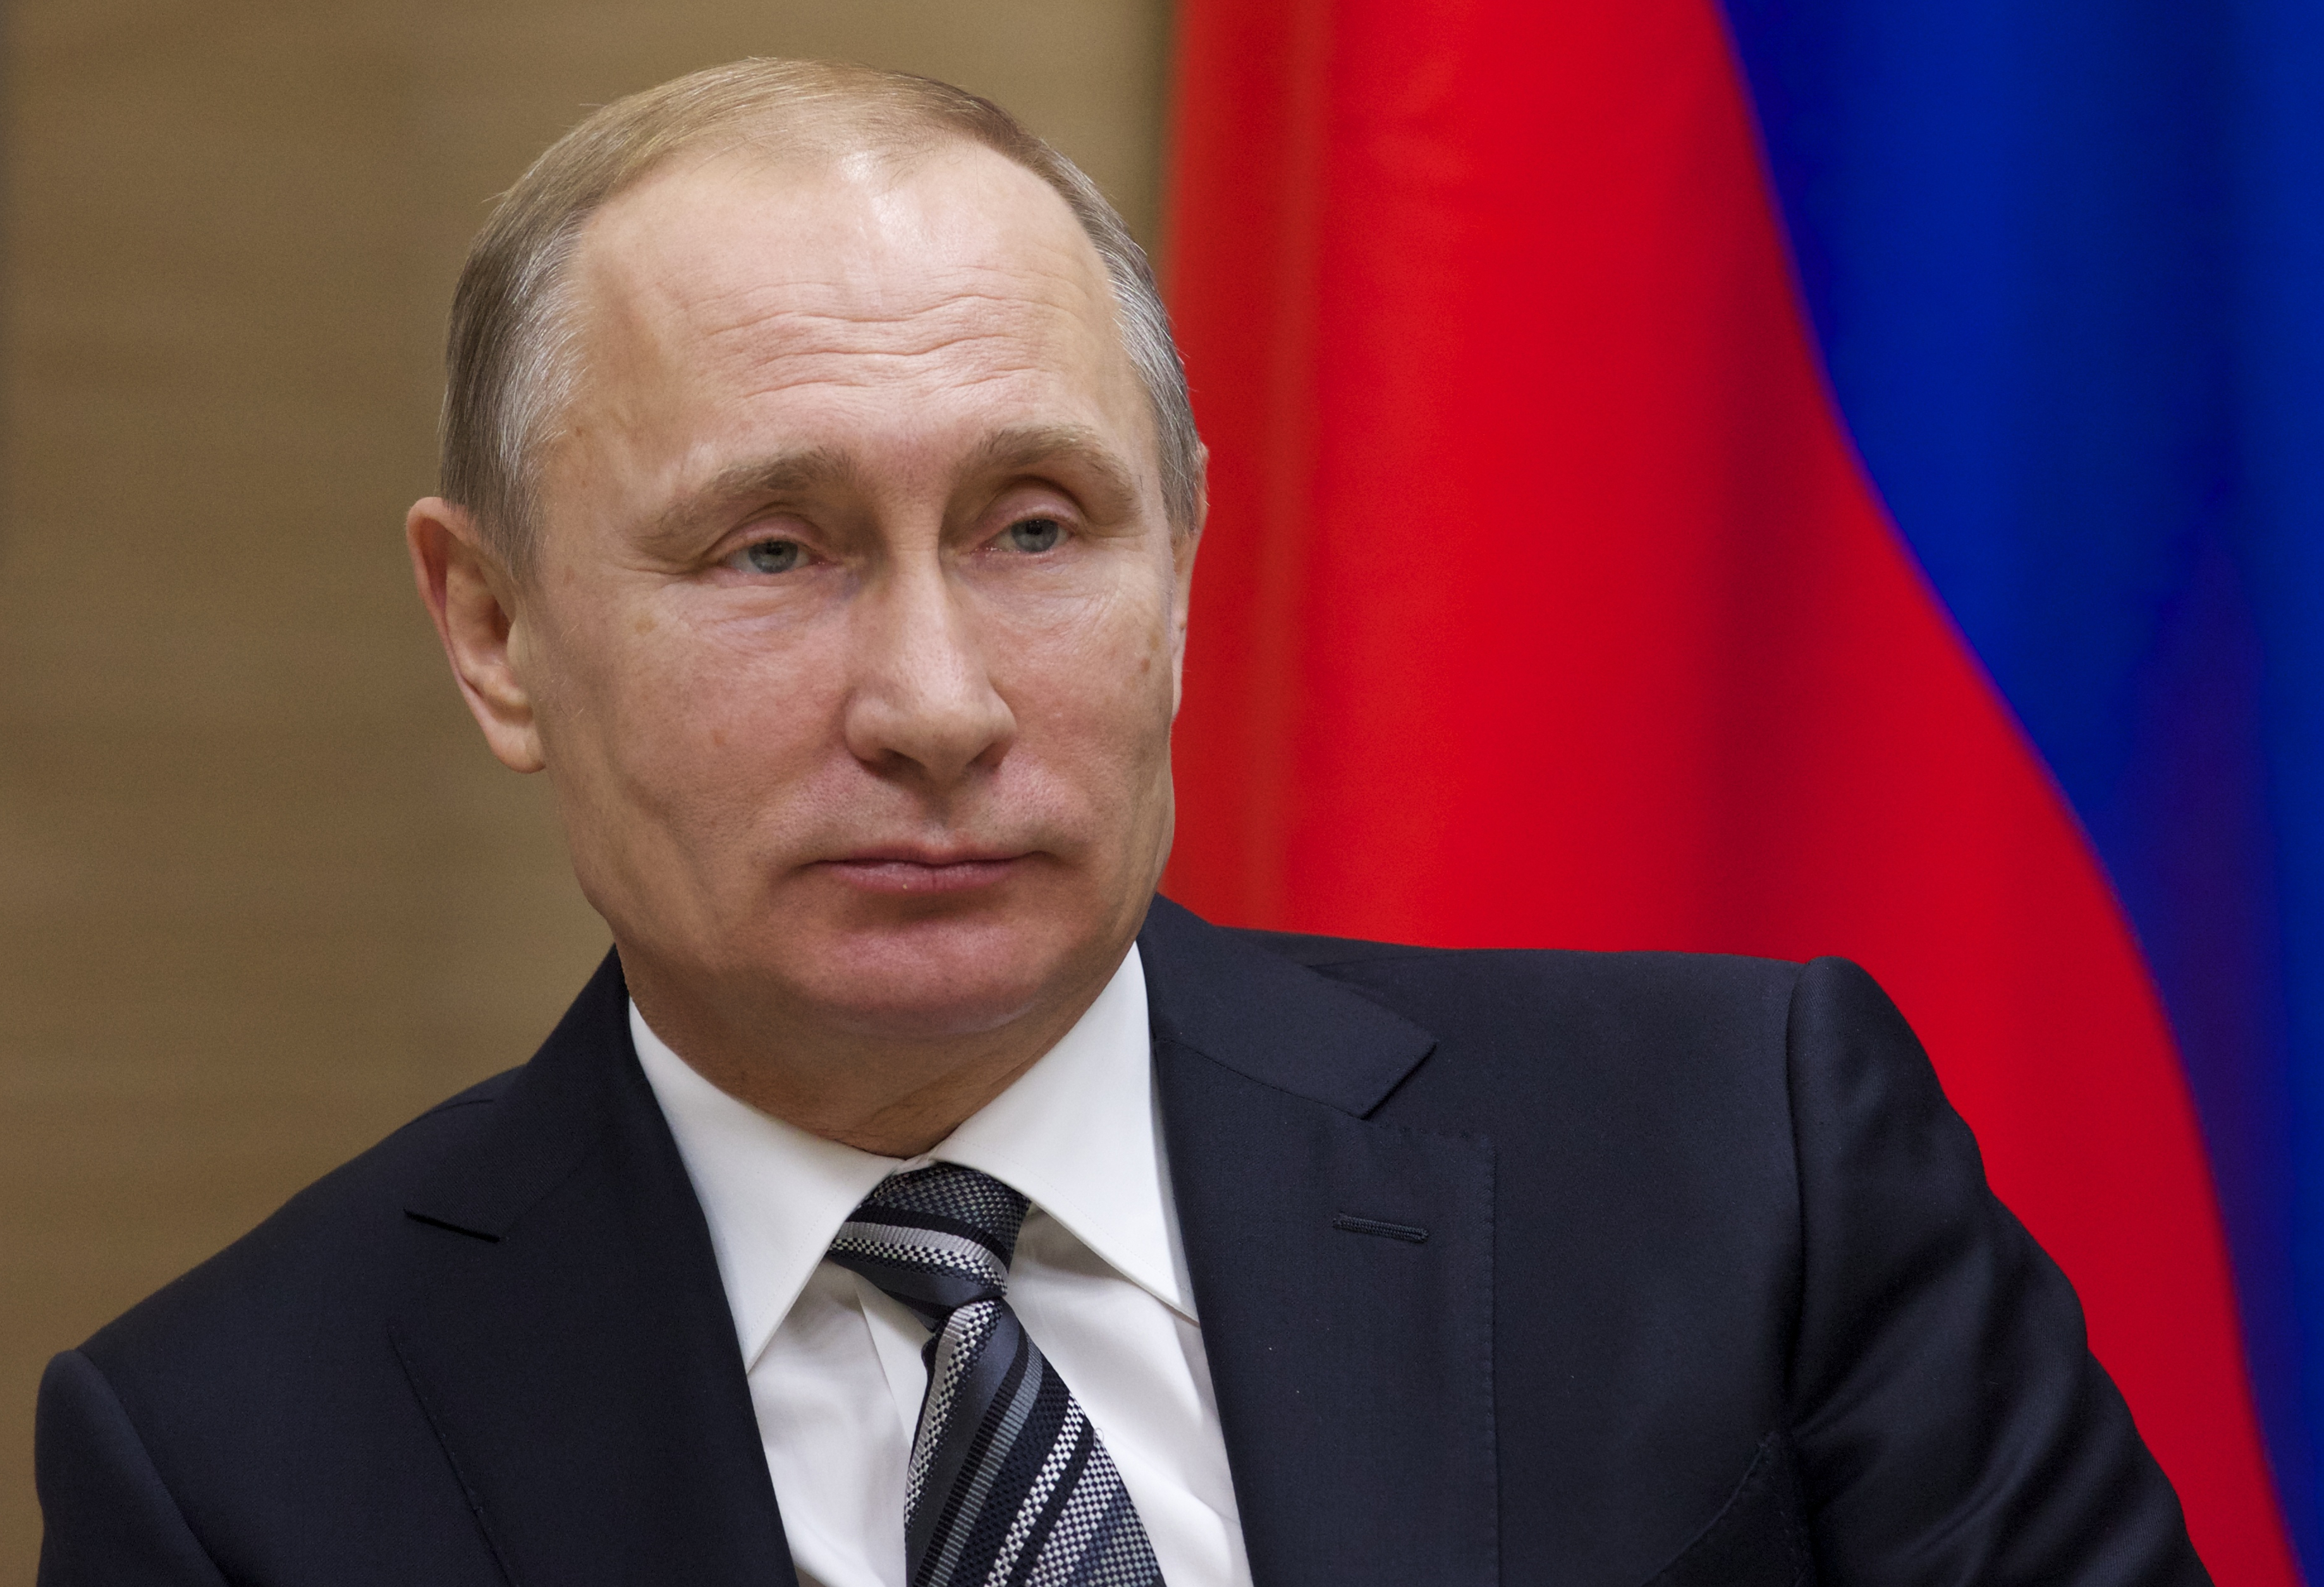 Vladimir Putin ar dori relansarea relațiilor cu UE